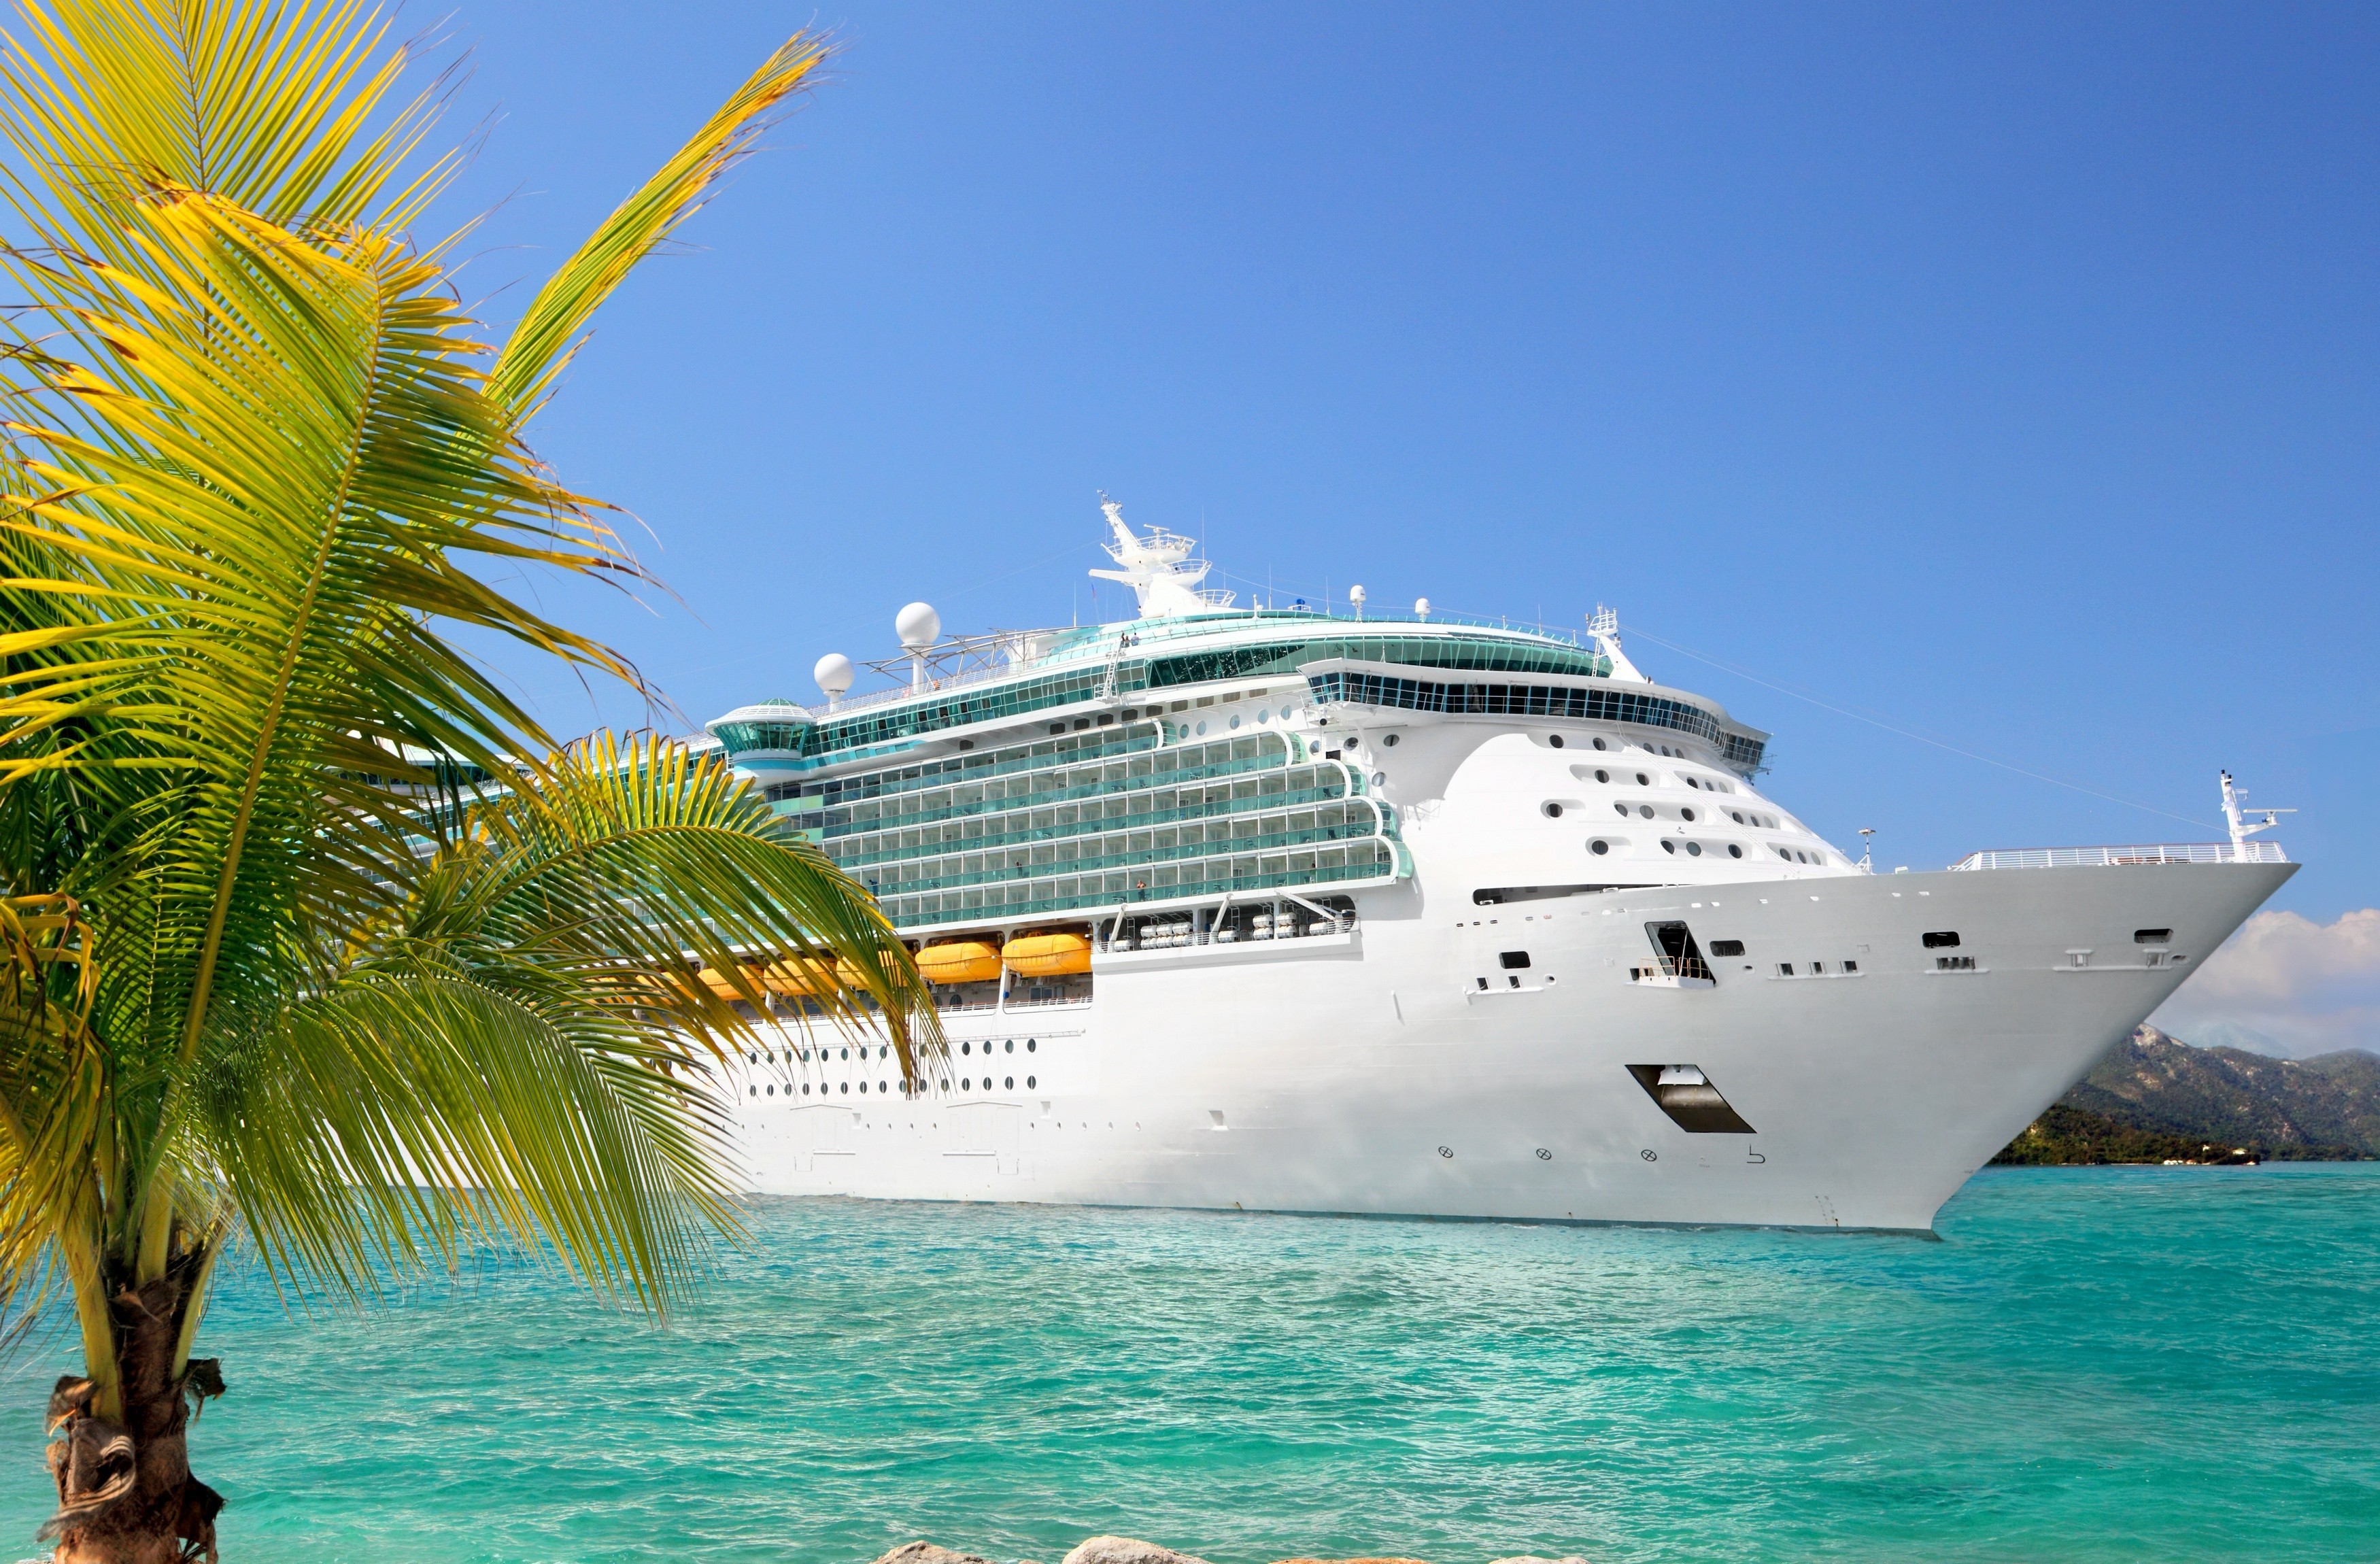 cruise wallpaper,cruise ship,water transportation,ship,passenger ship,vehicle